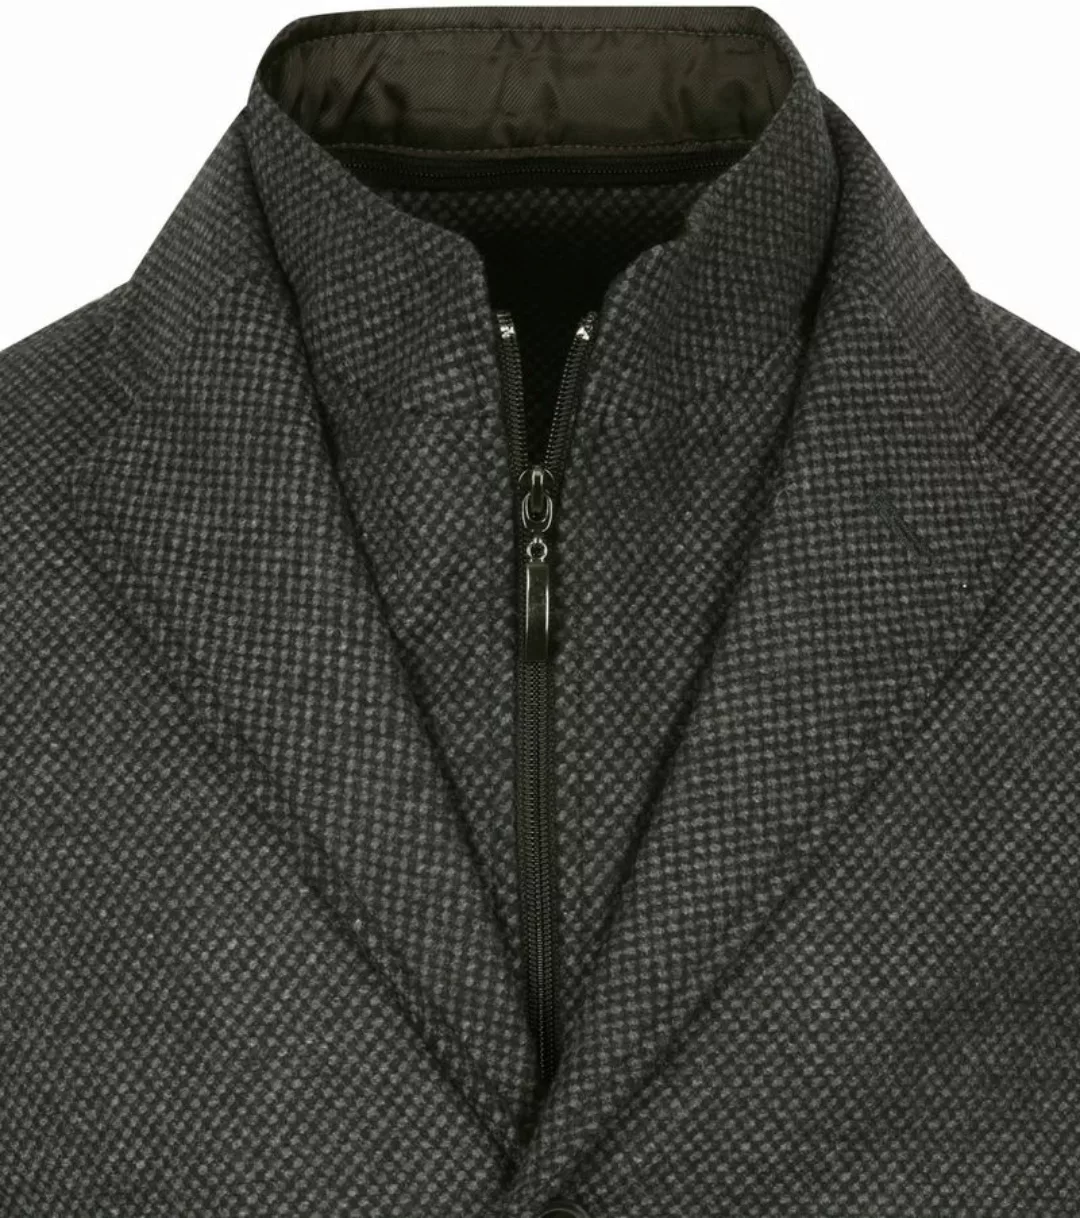 Suitable K150 Mantel Wool Blend kariert Dunkelgrün - Größe 46 günstig online kaufen